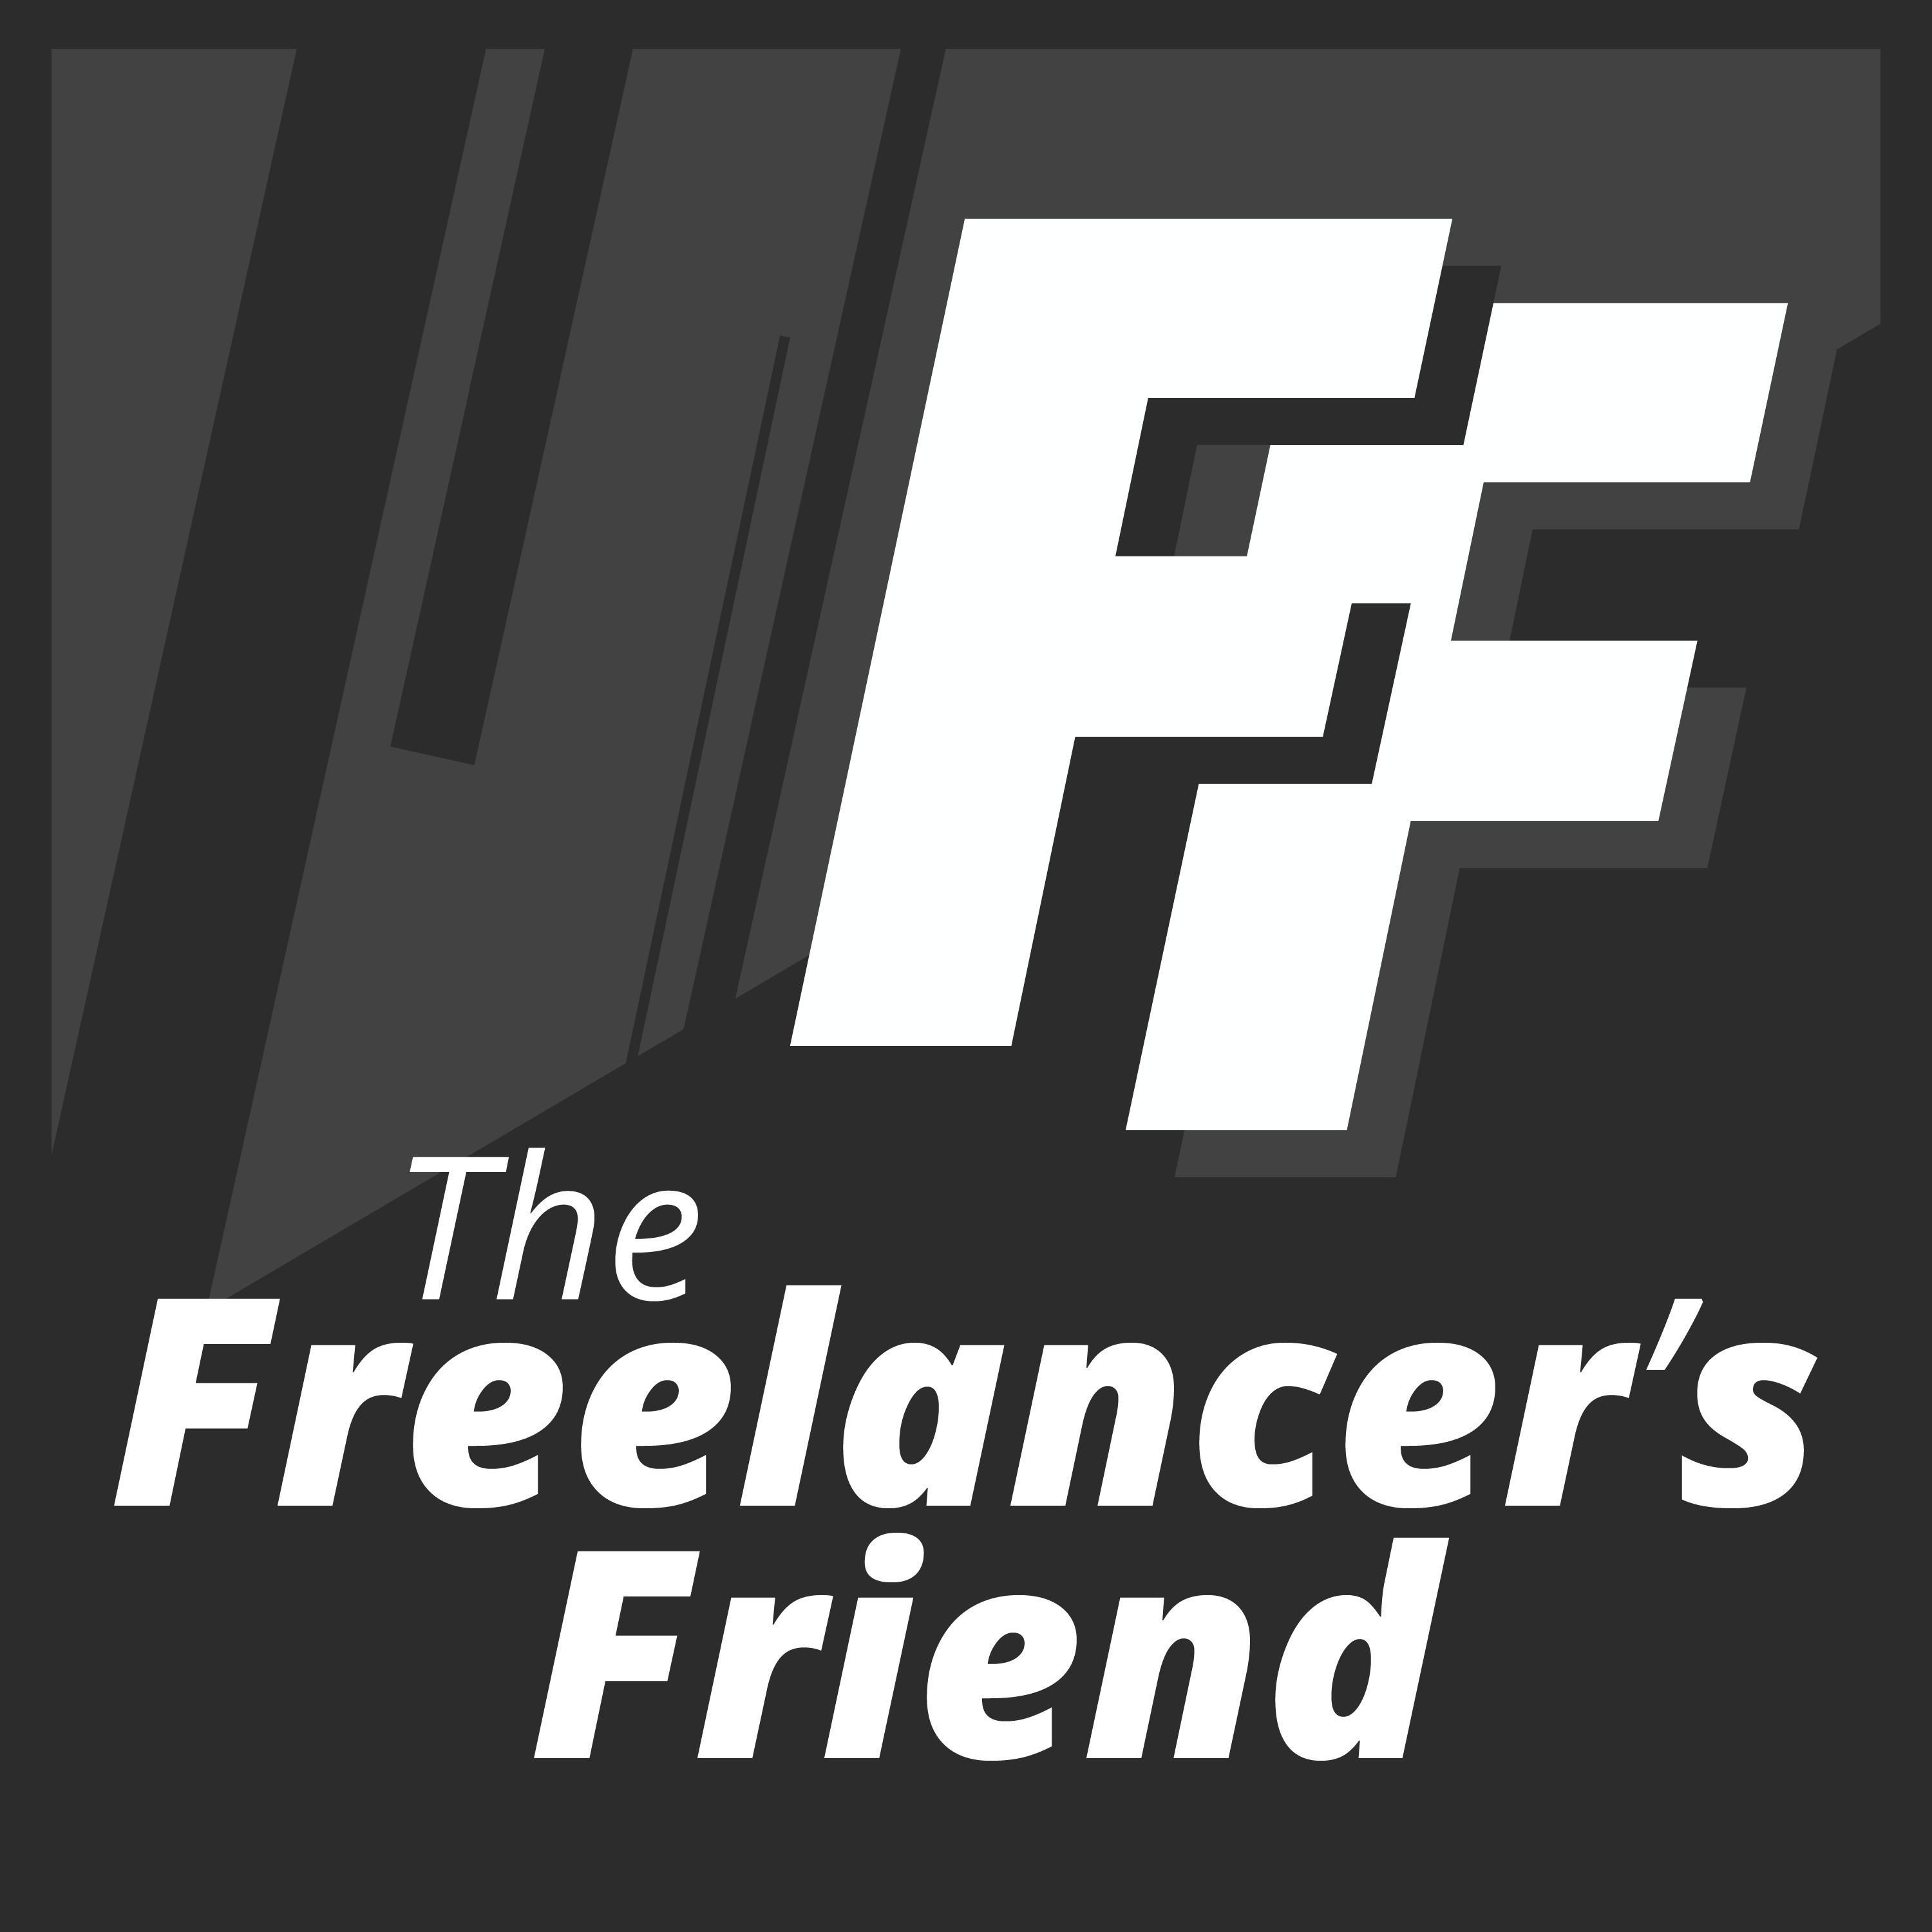 The Freelancer's Friend